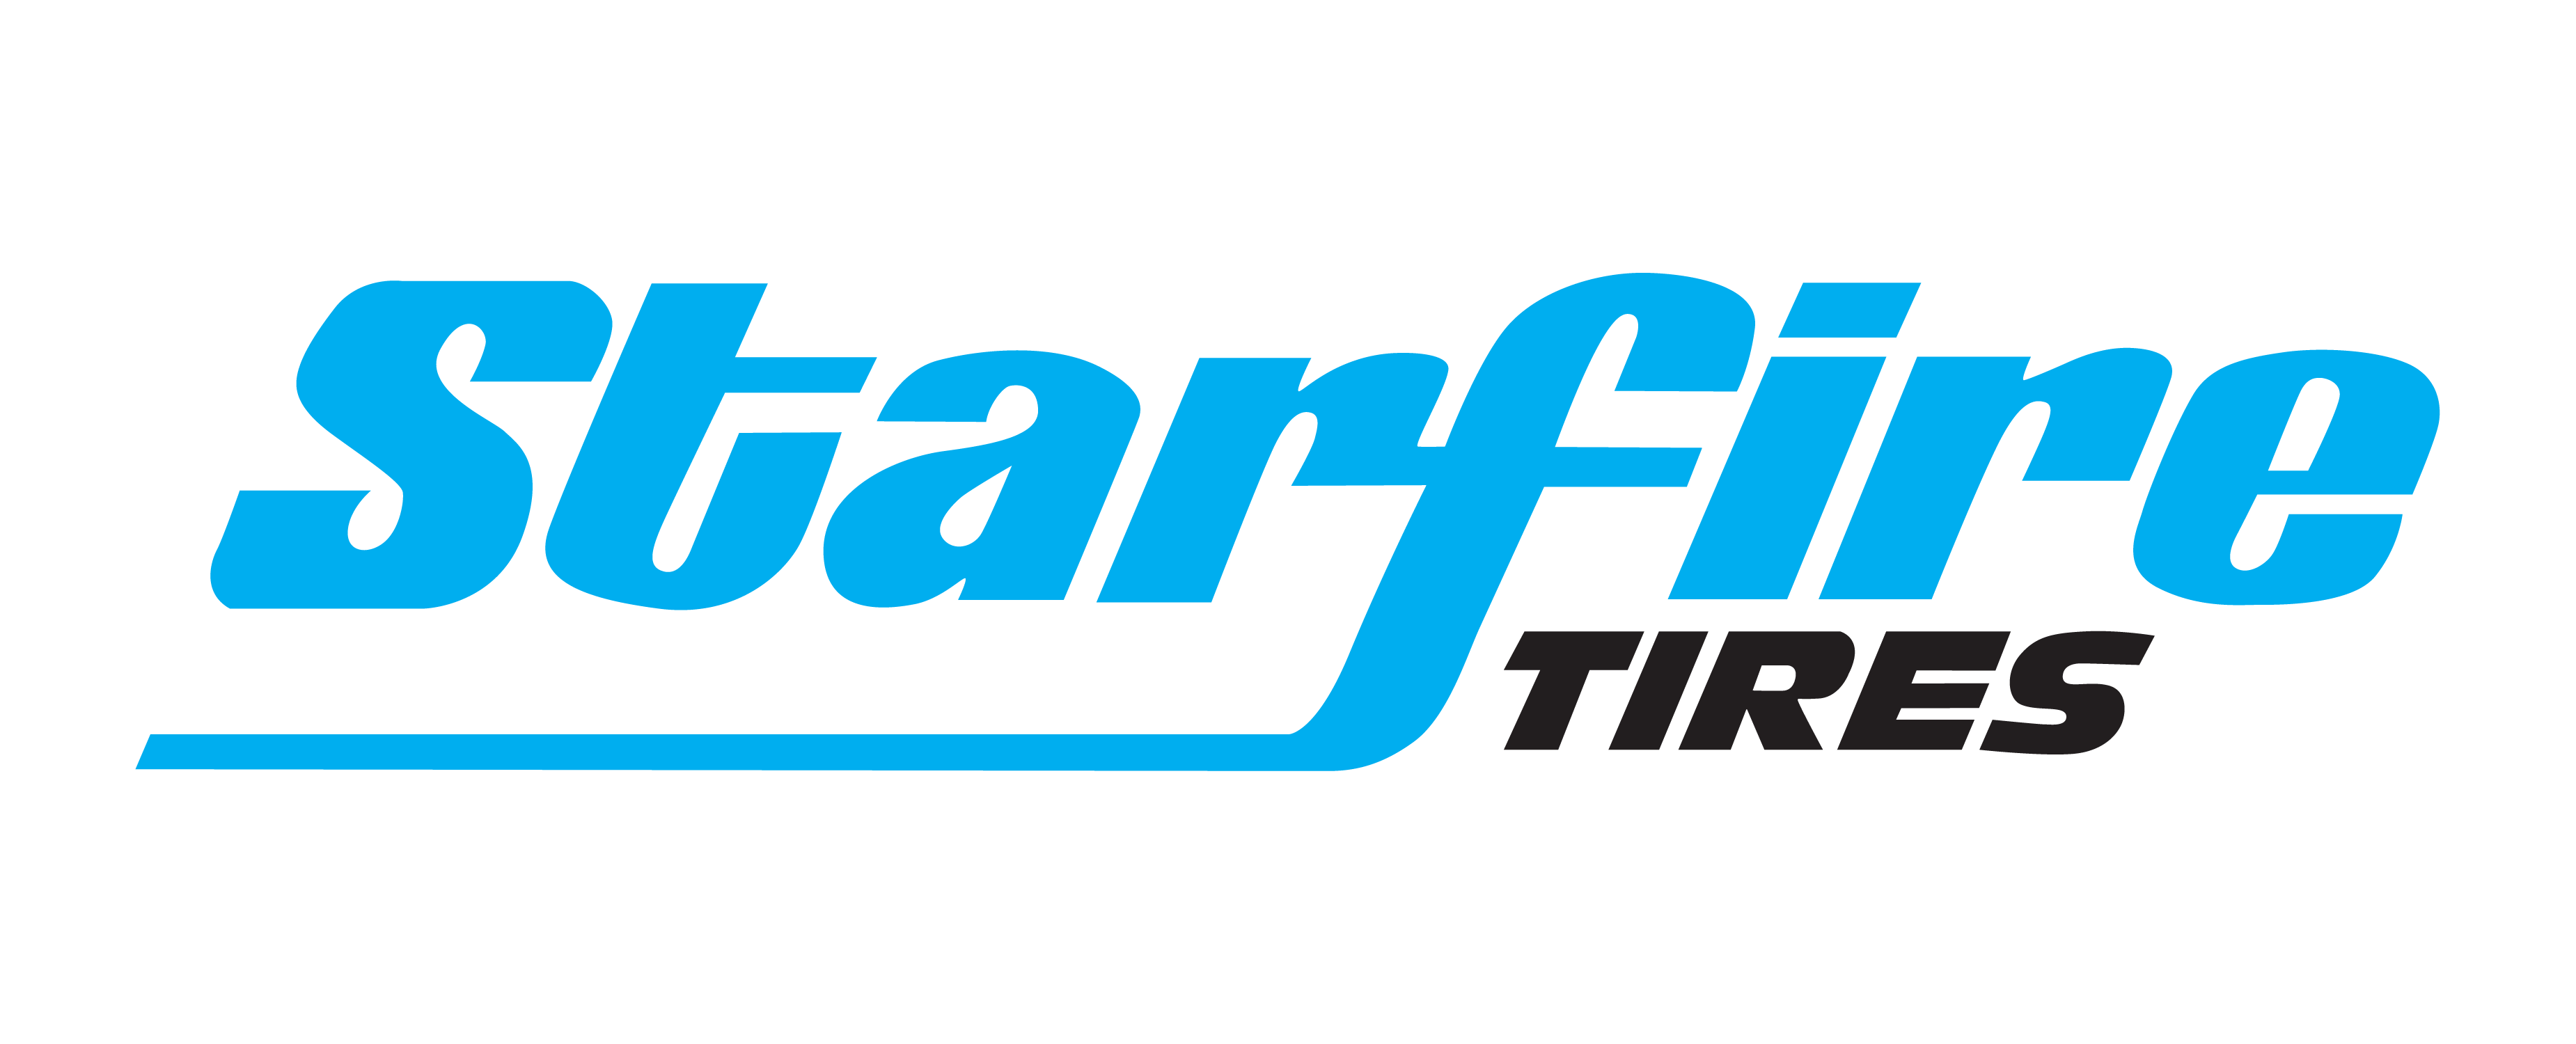 Starfire tires